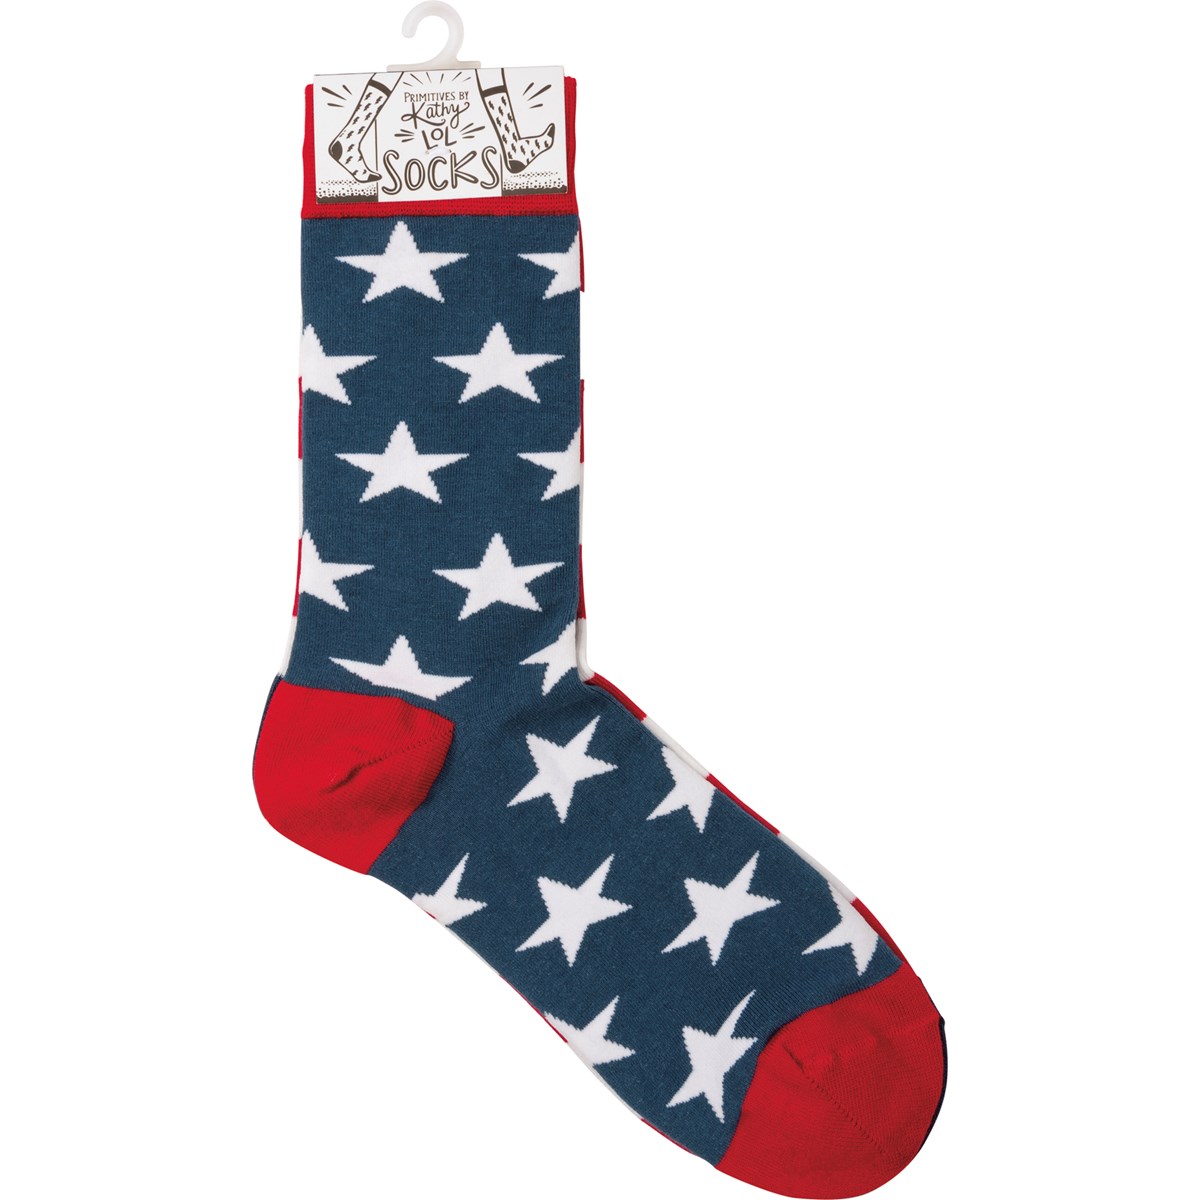 Socks - Stars & Stripes - One Size Fits Most - Cotton, Nylon, Spandex